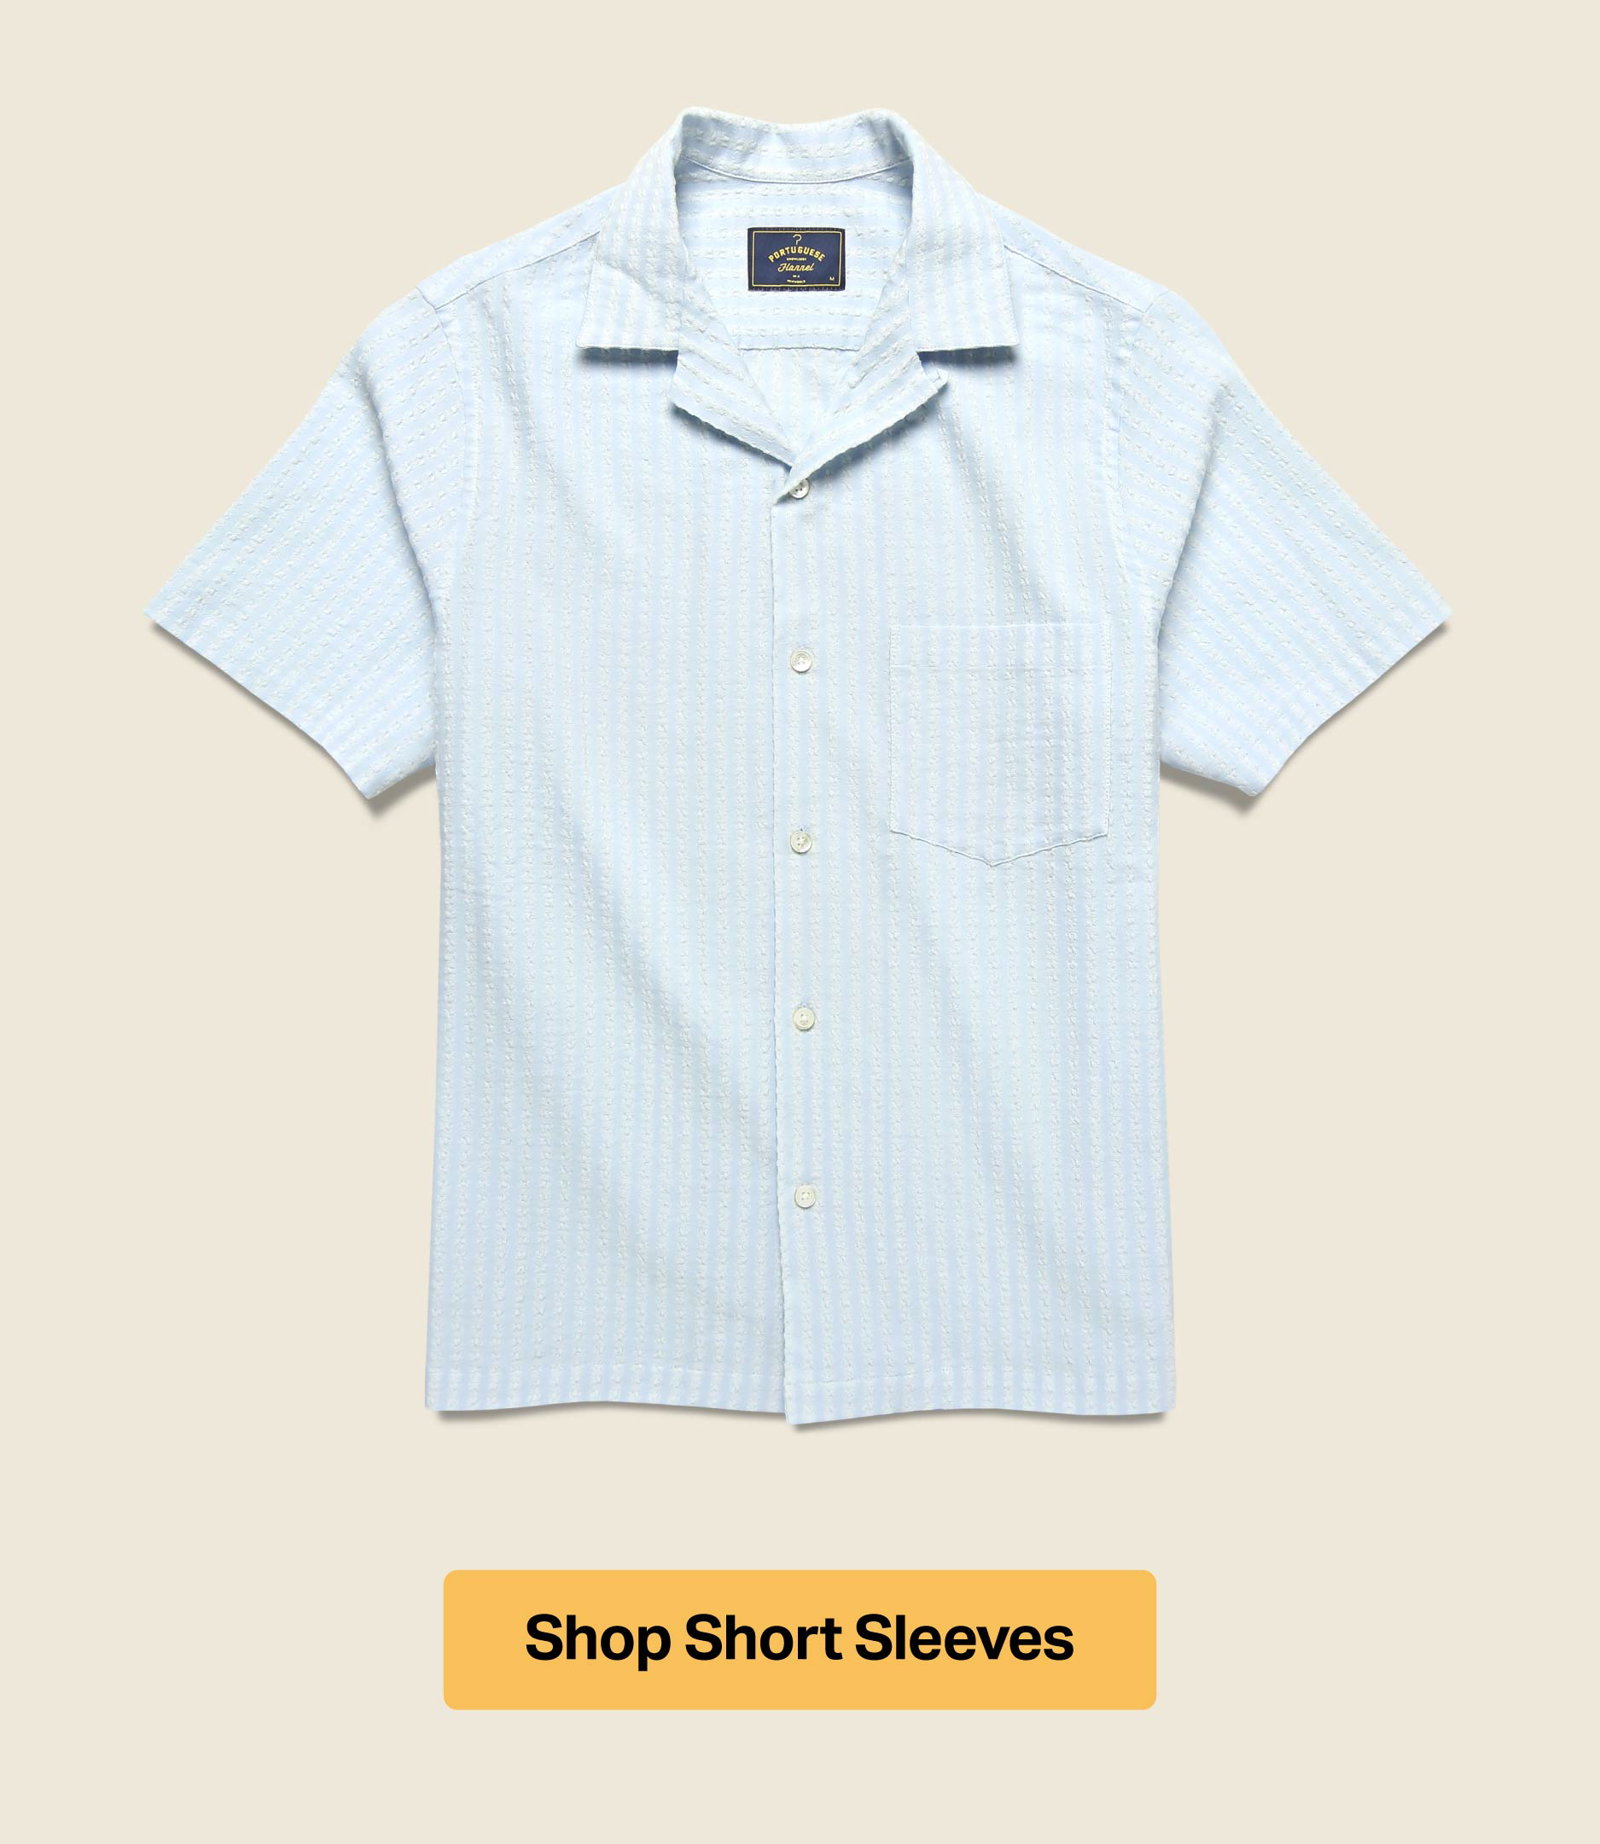 Shop Short Sleeves